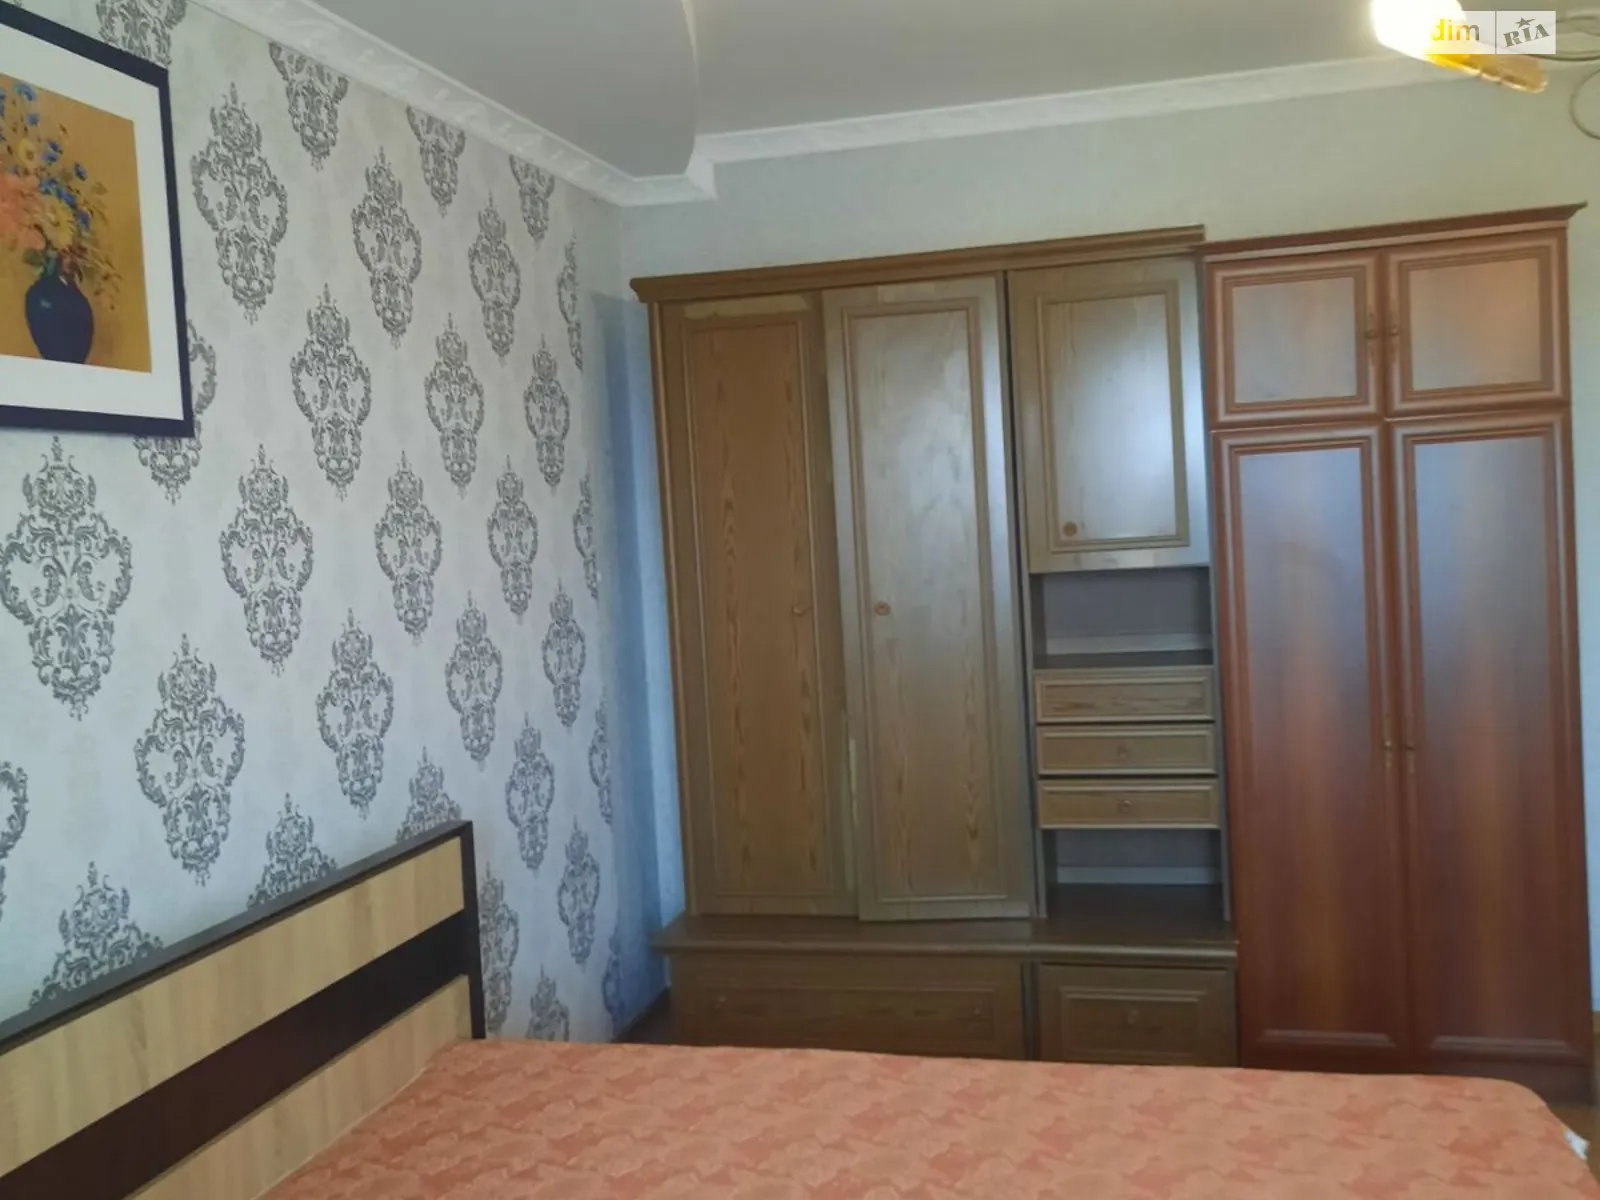 Сдается в аренду комната 120 кв. м в Тернополе - фото 3